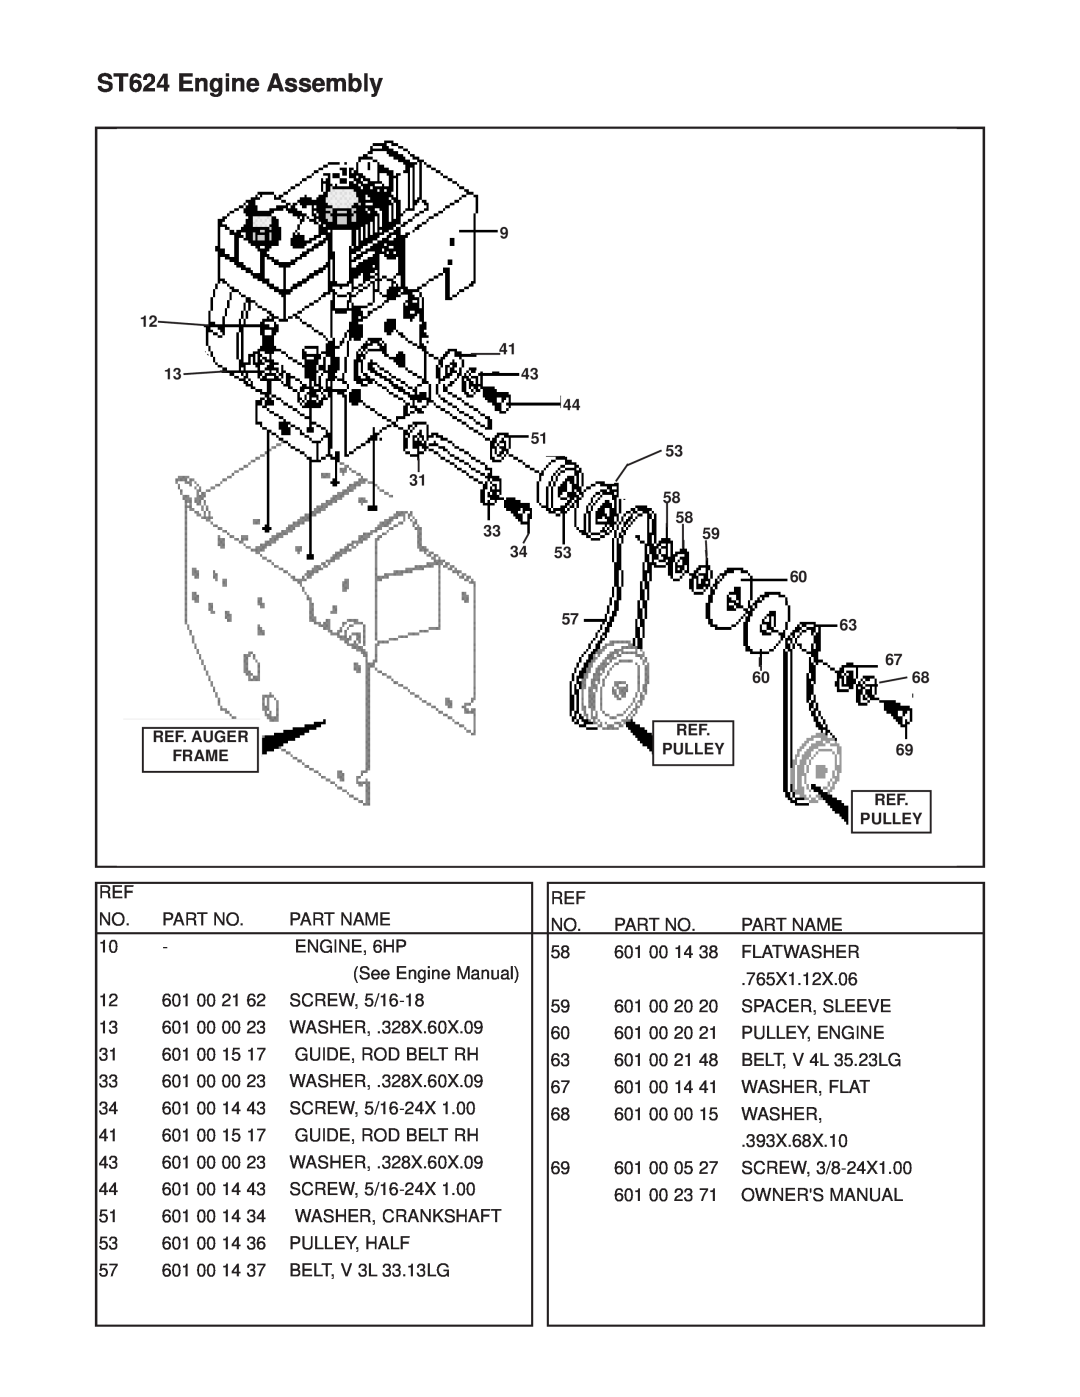 Husqvarna ST624E manual ST624 Engine Assembly 